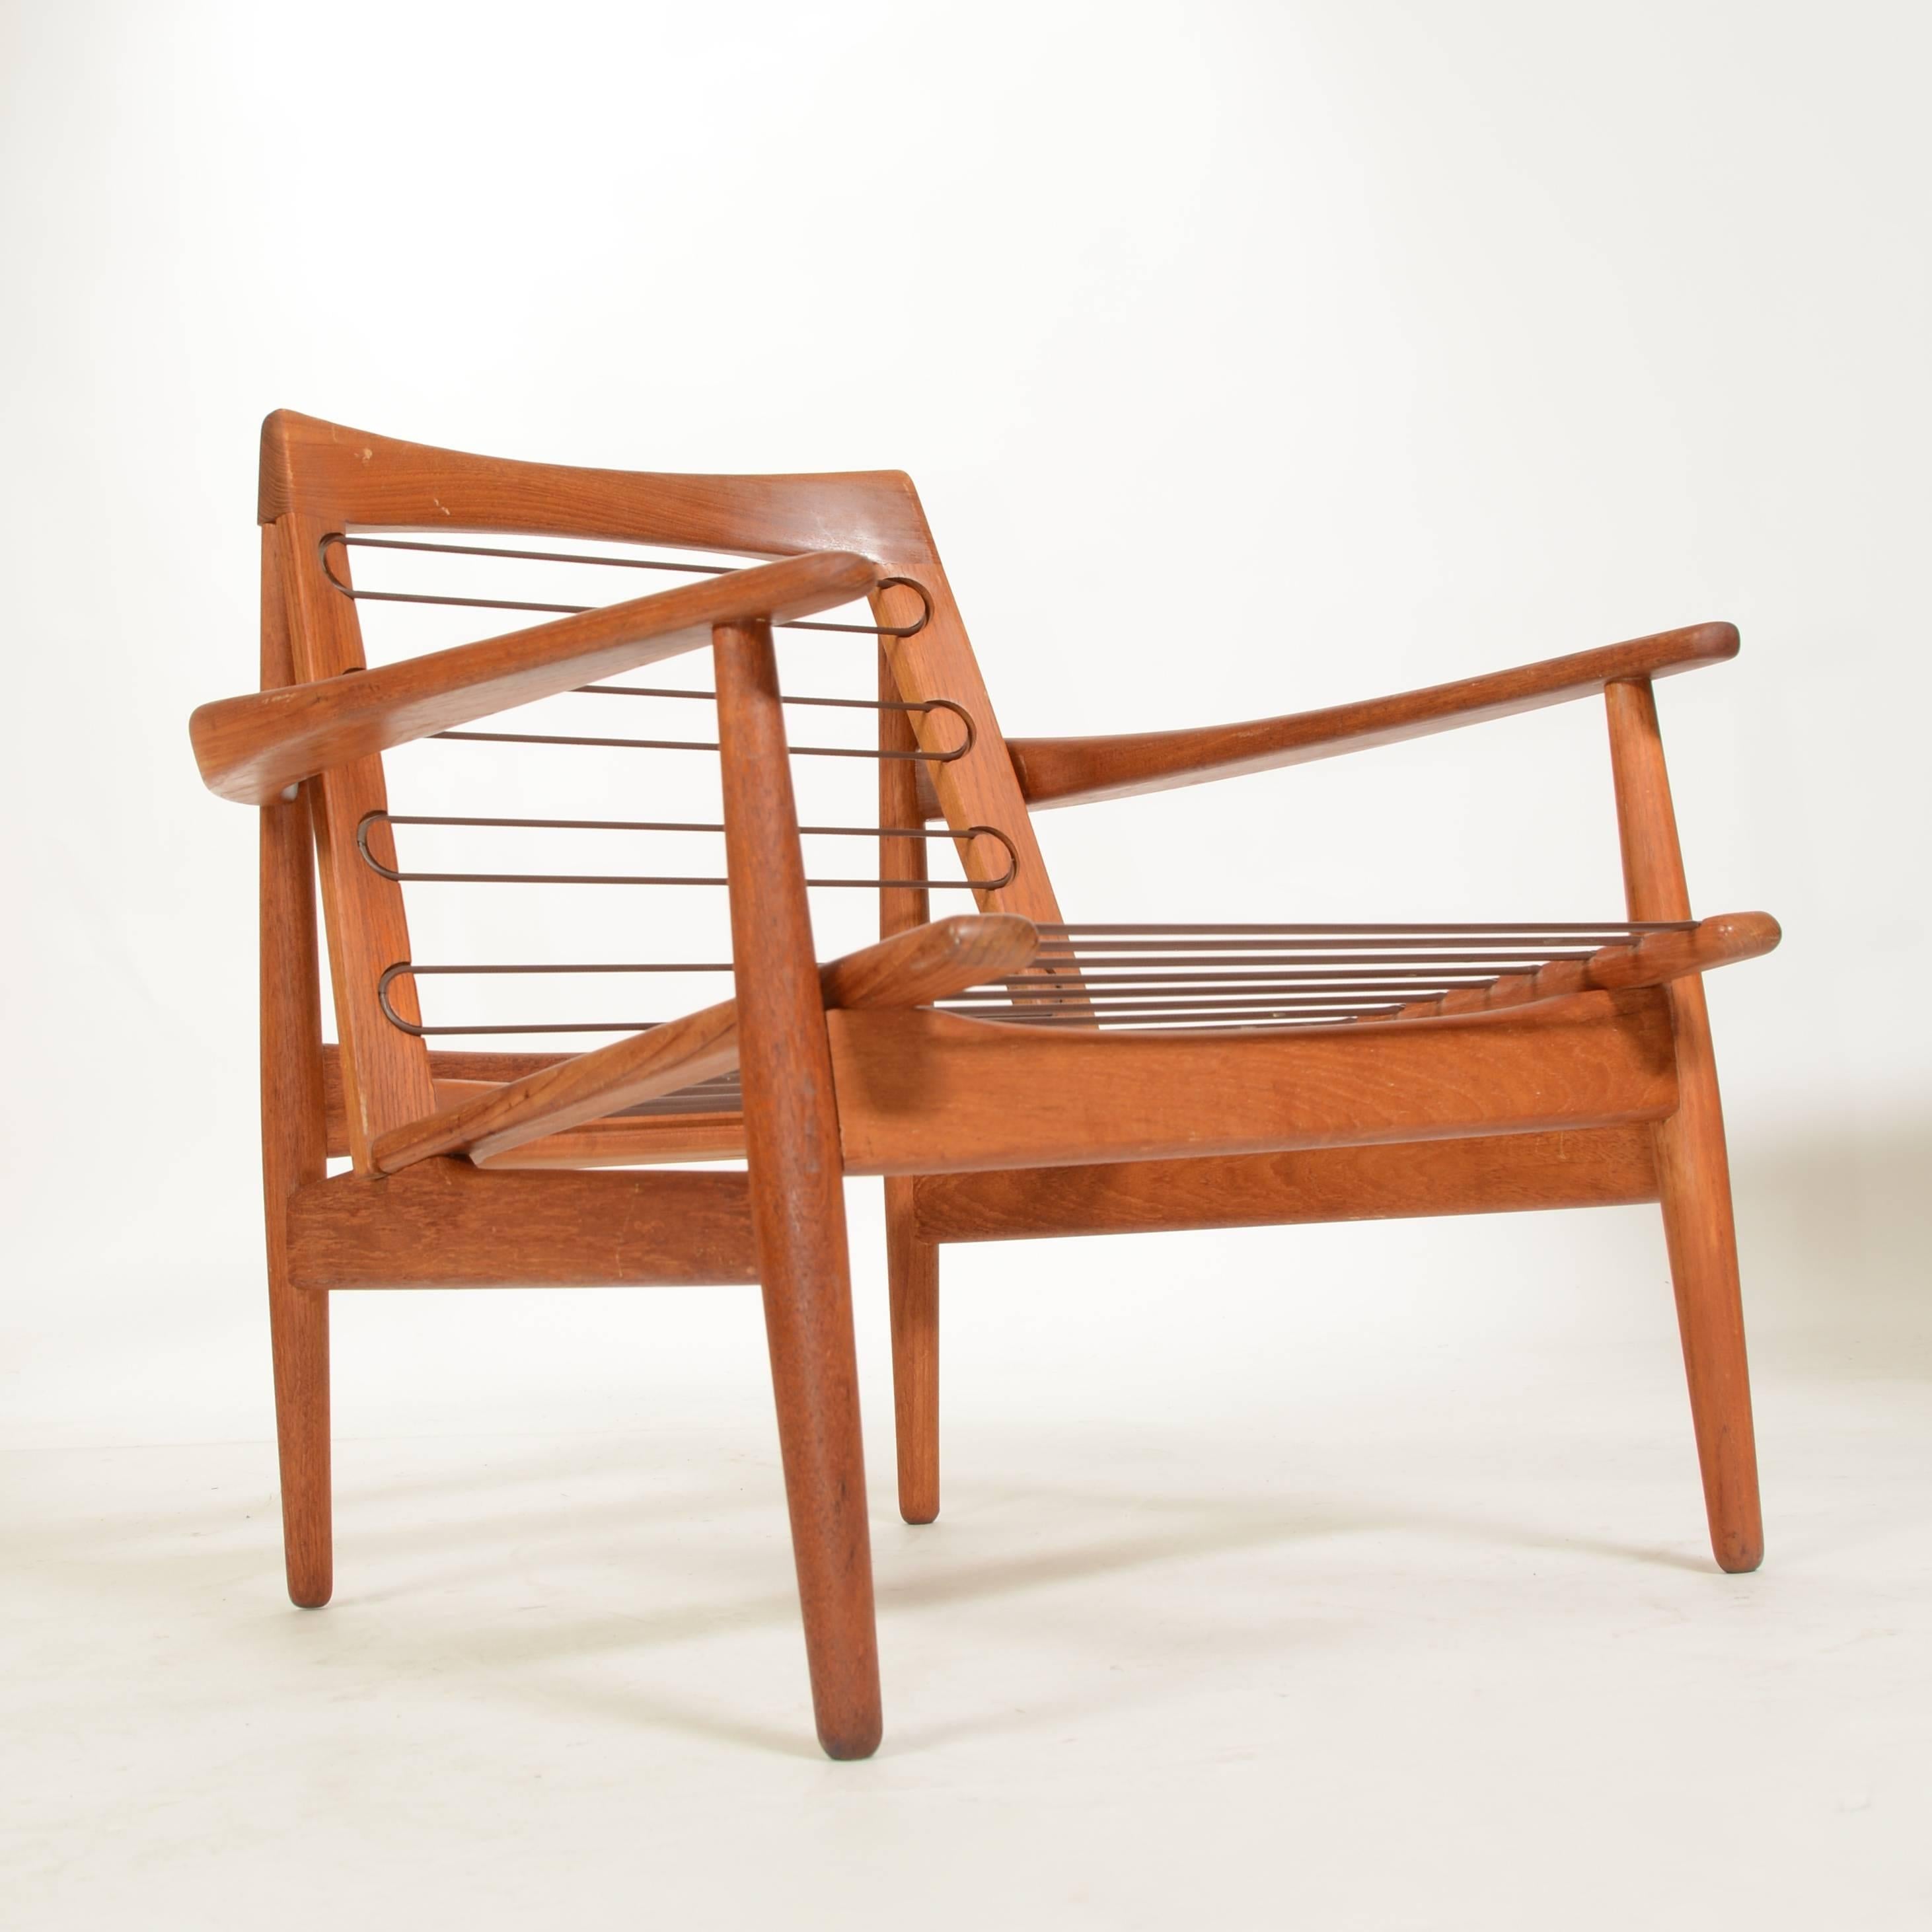 Mid-20th Century Pair of Danish Modern Greta Jalk Style Teak Lounge Chairs